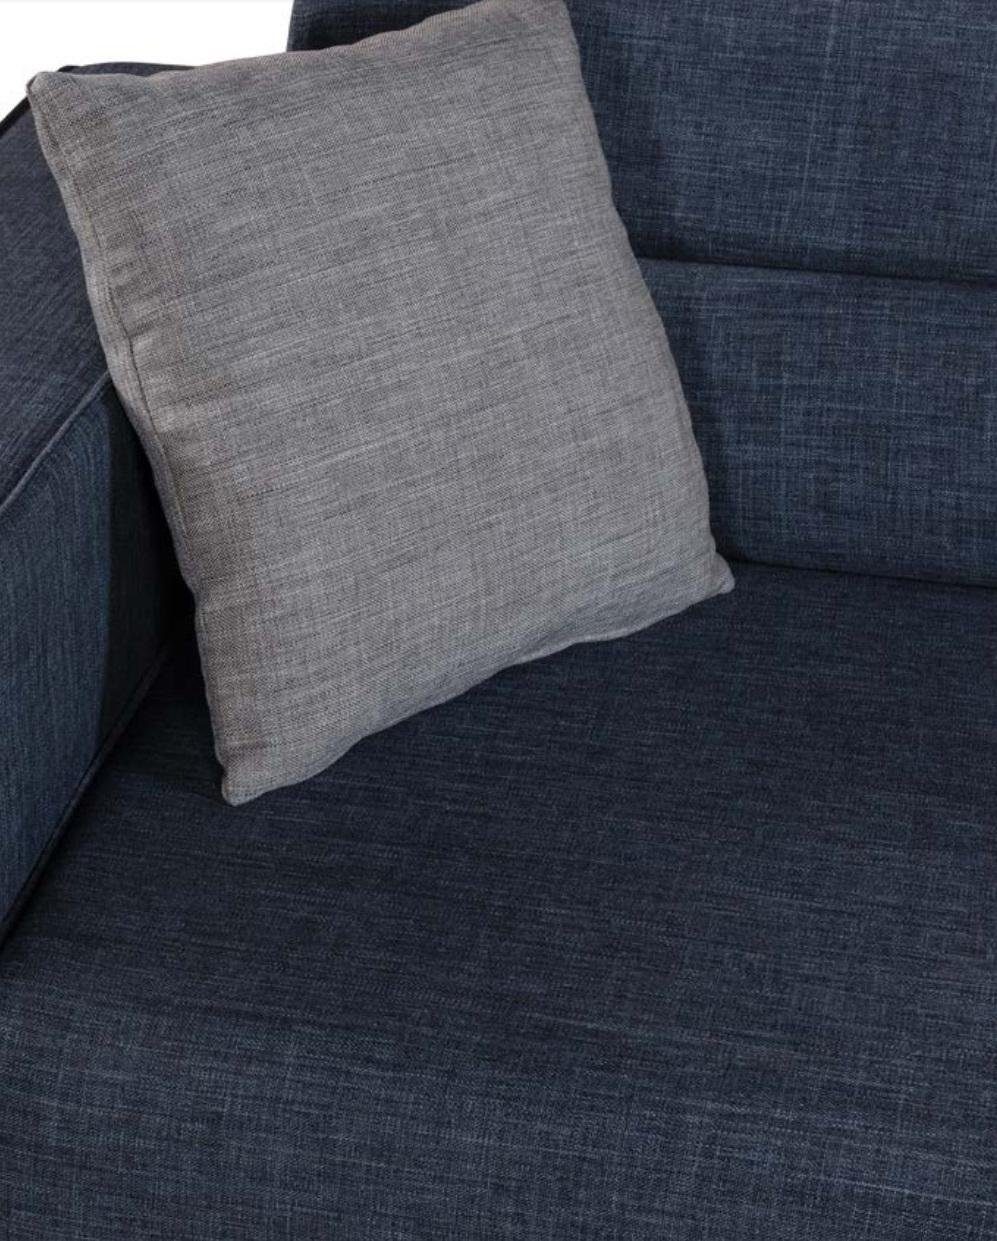 Möbel Stil Sitzer Dreisitzer Design 3 Italienische JVmoebel Luxus Sofa Sofa